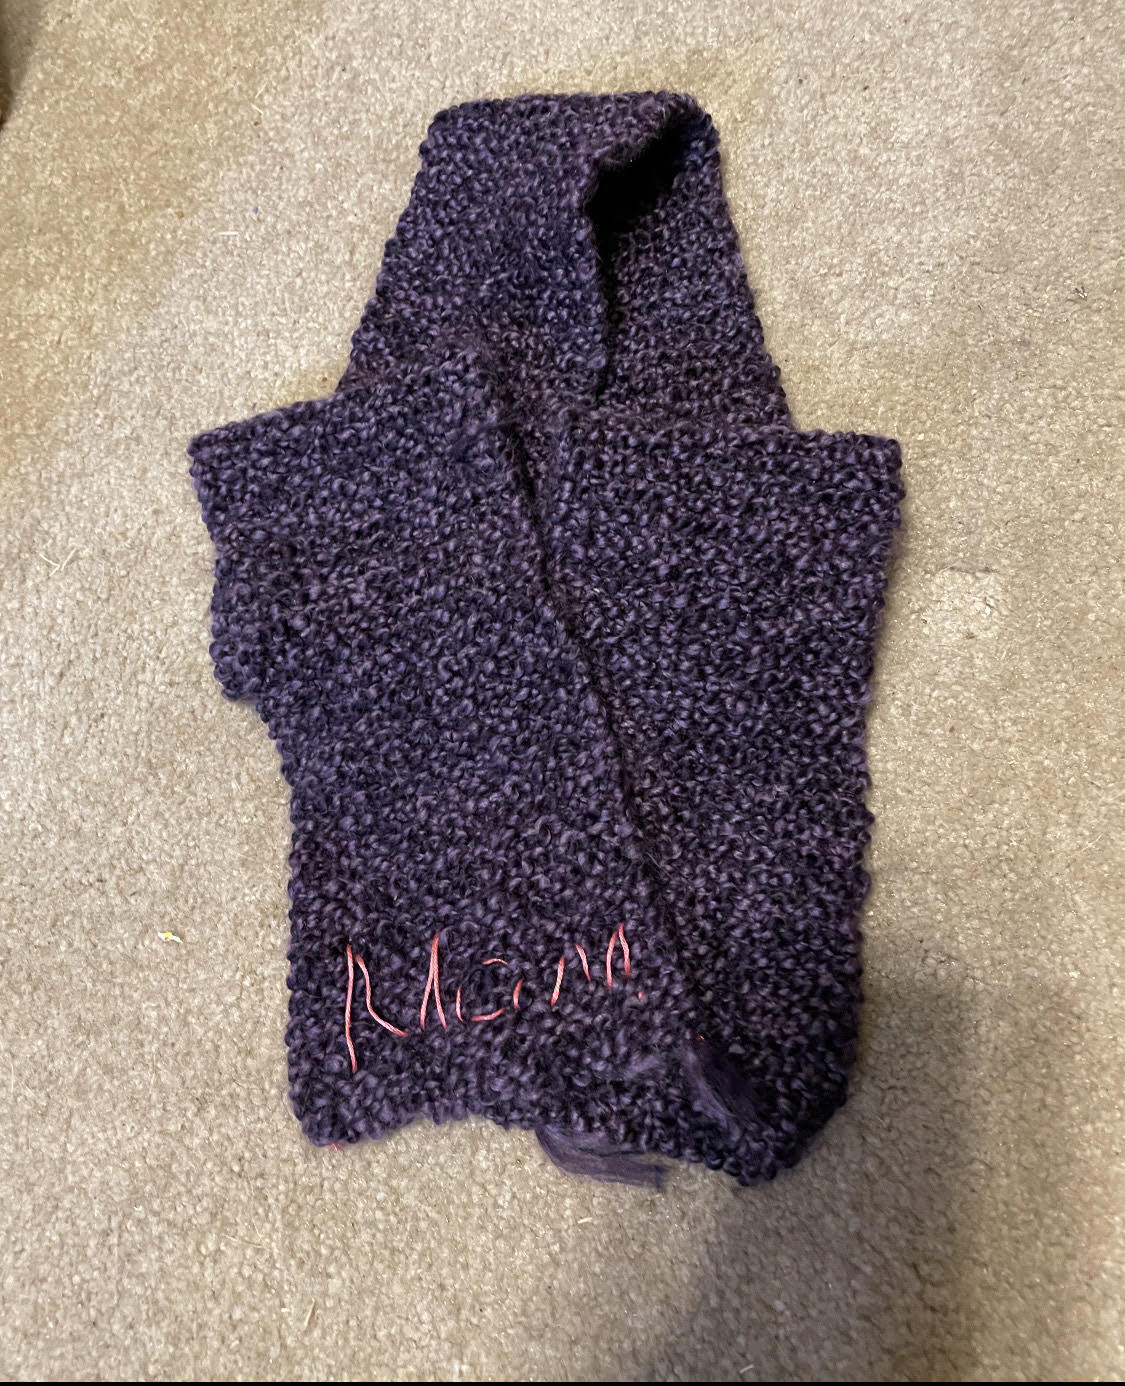 Mom's purple scarf